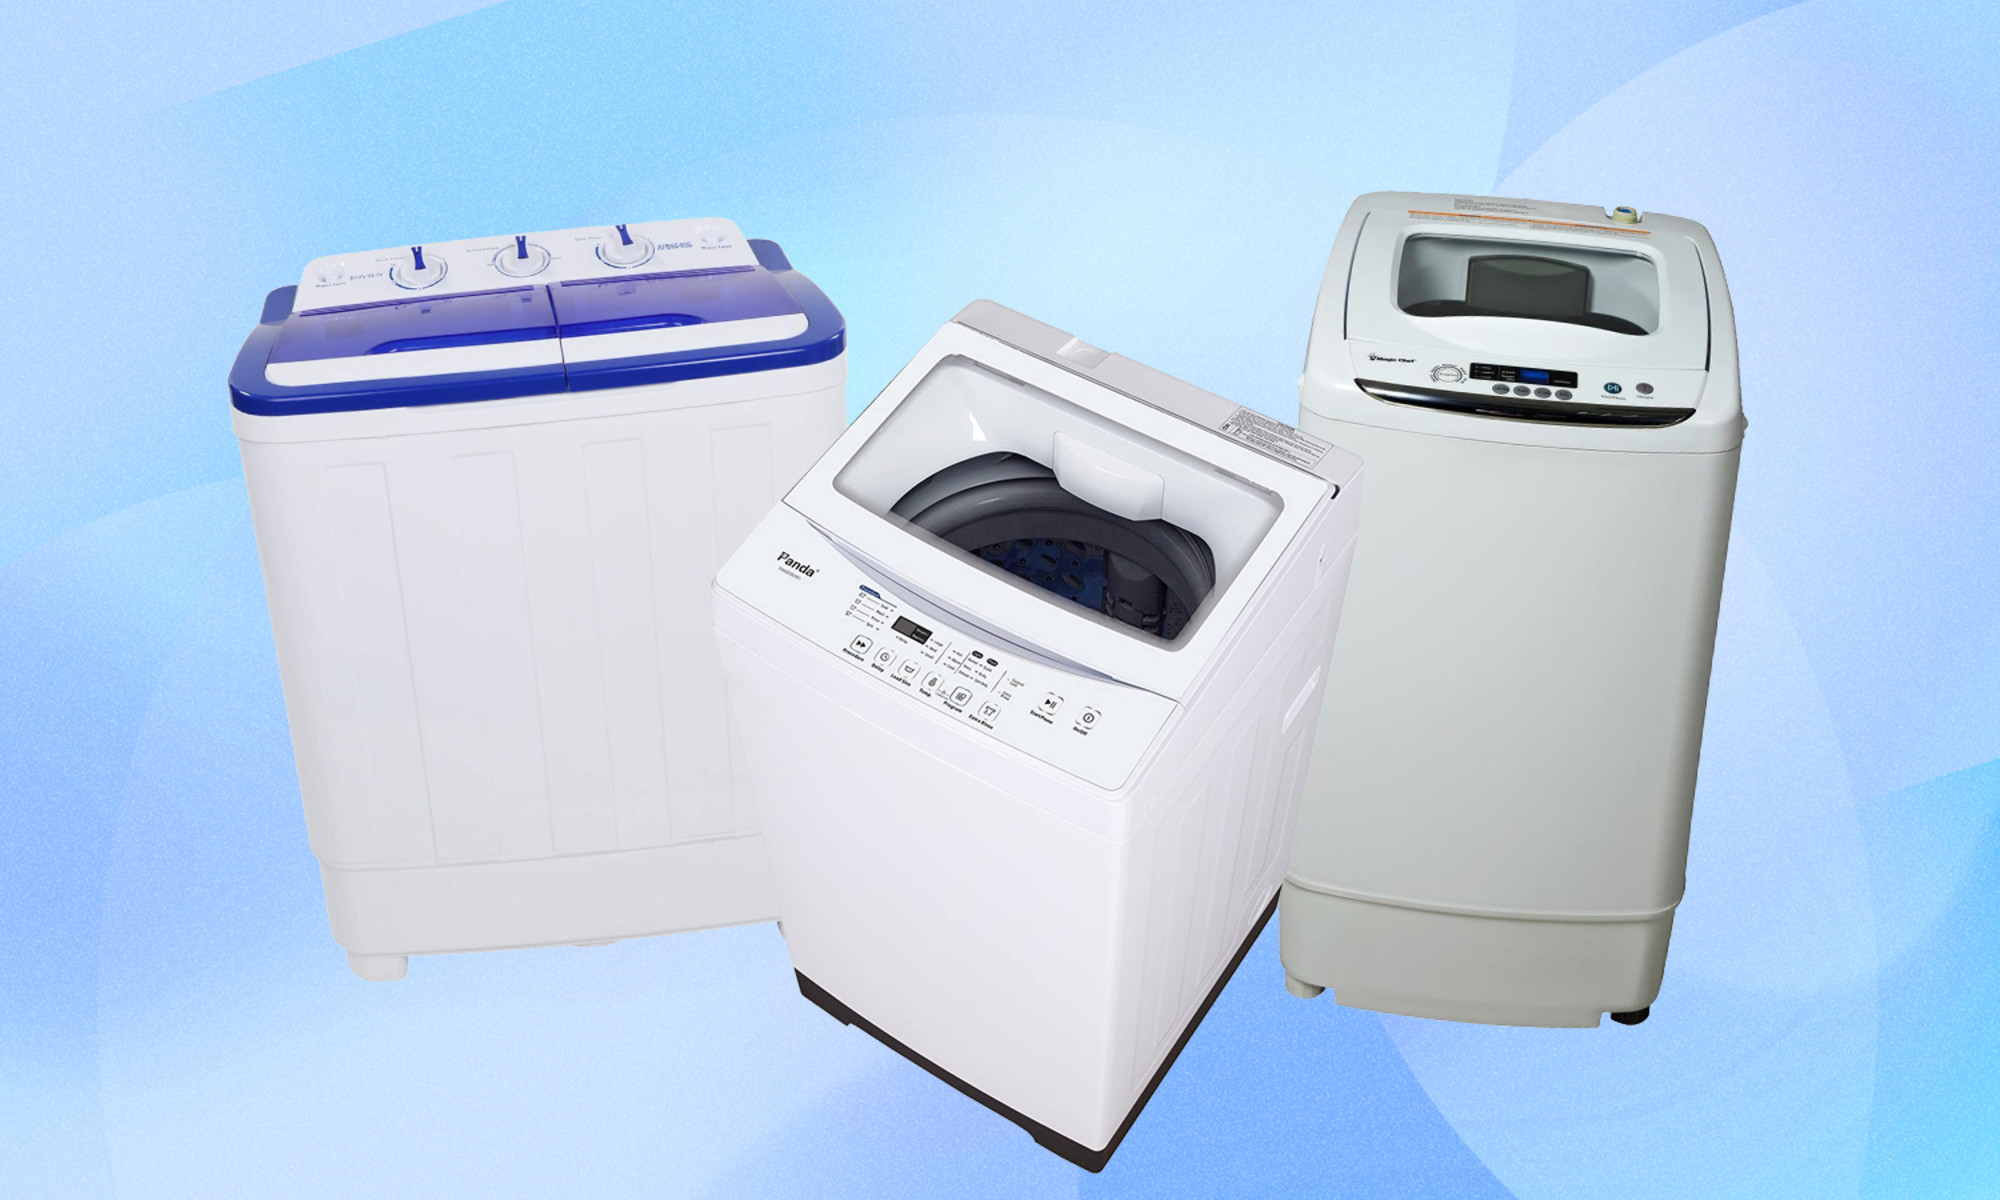 How to Wash Panda Portable Washing Machine